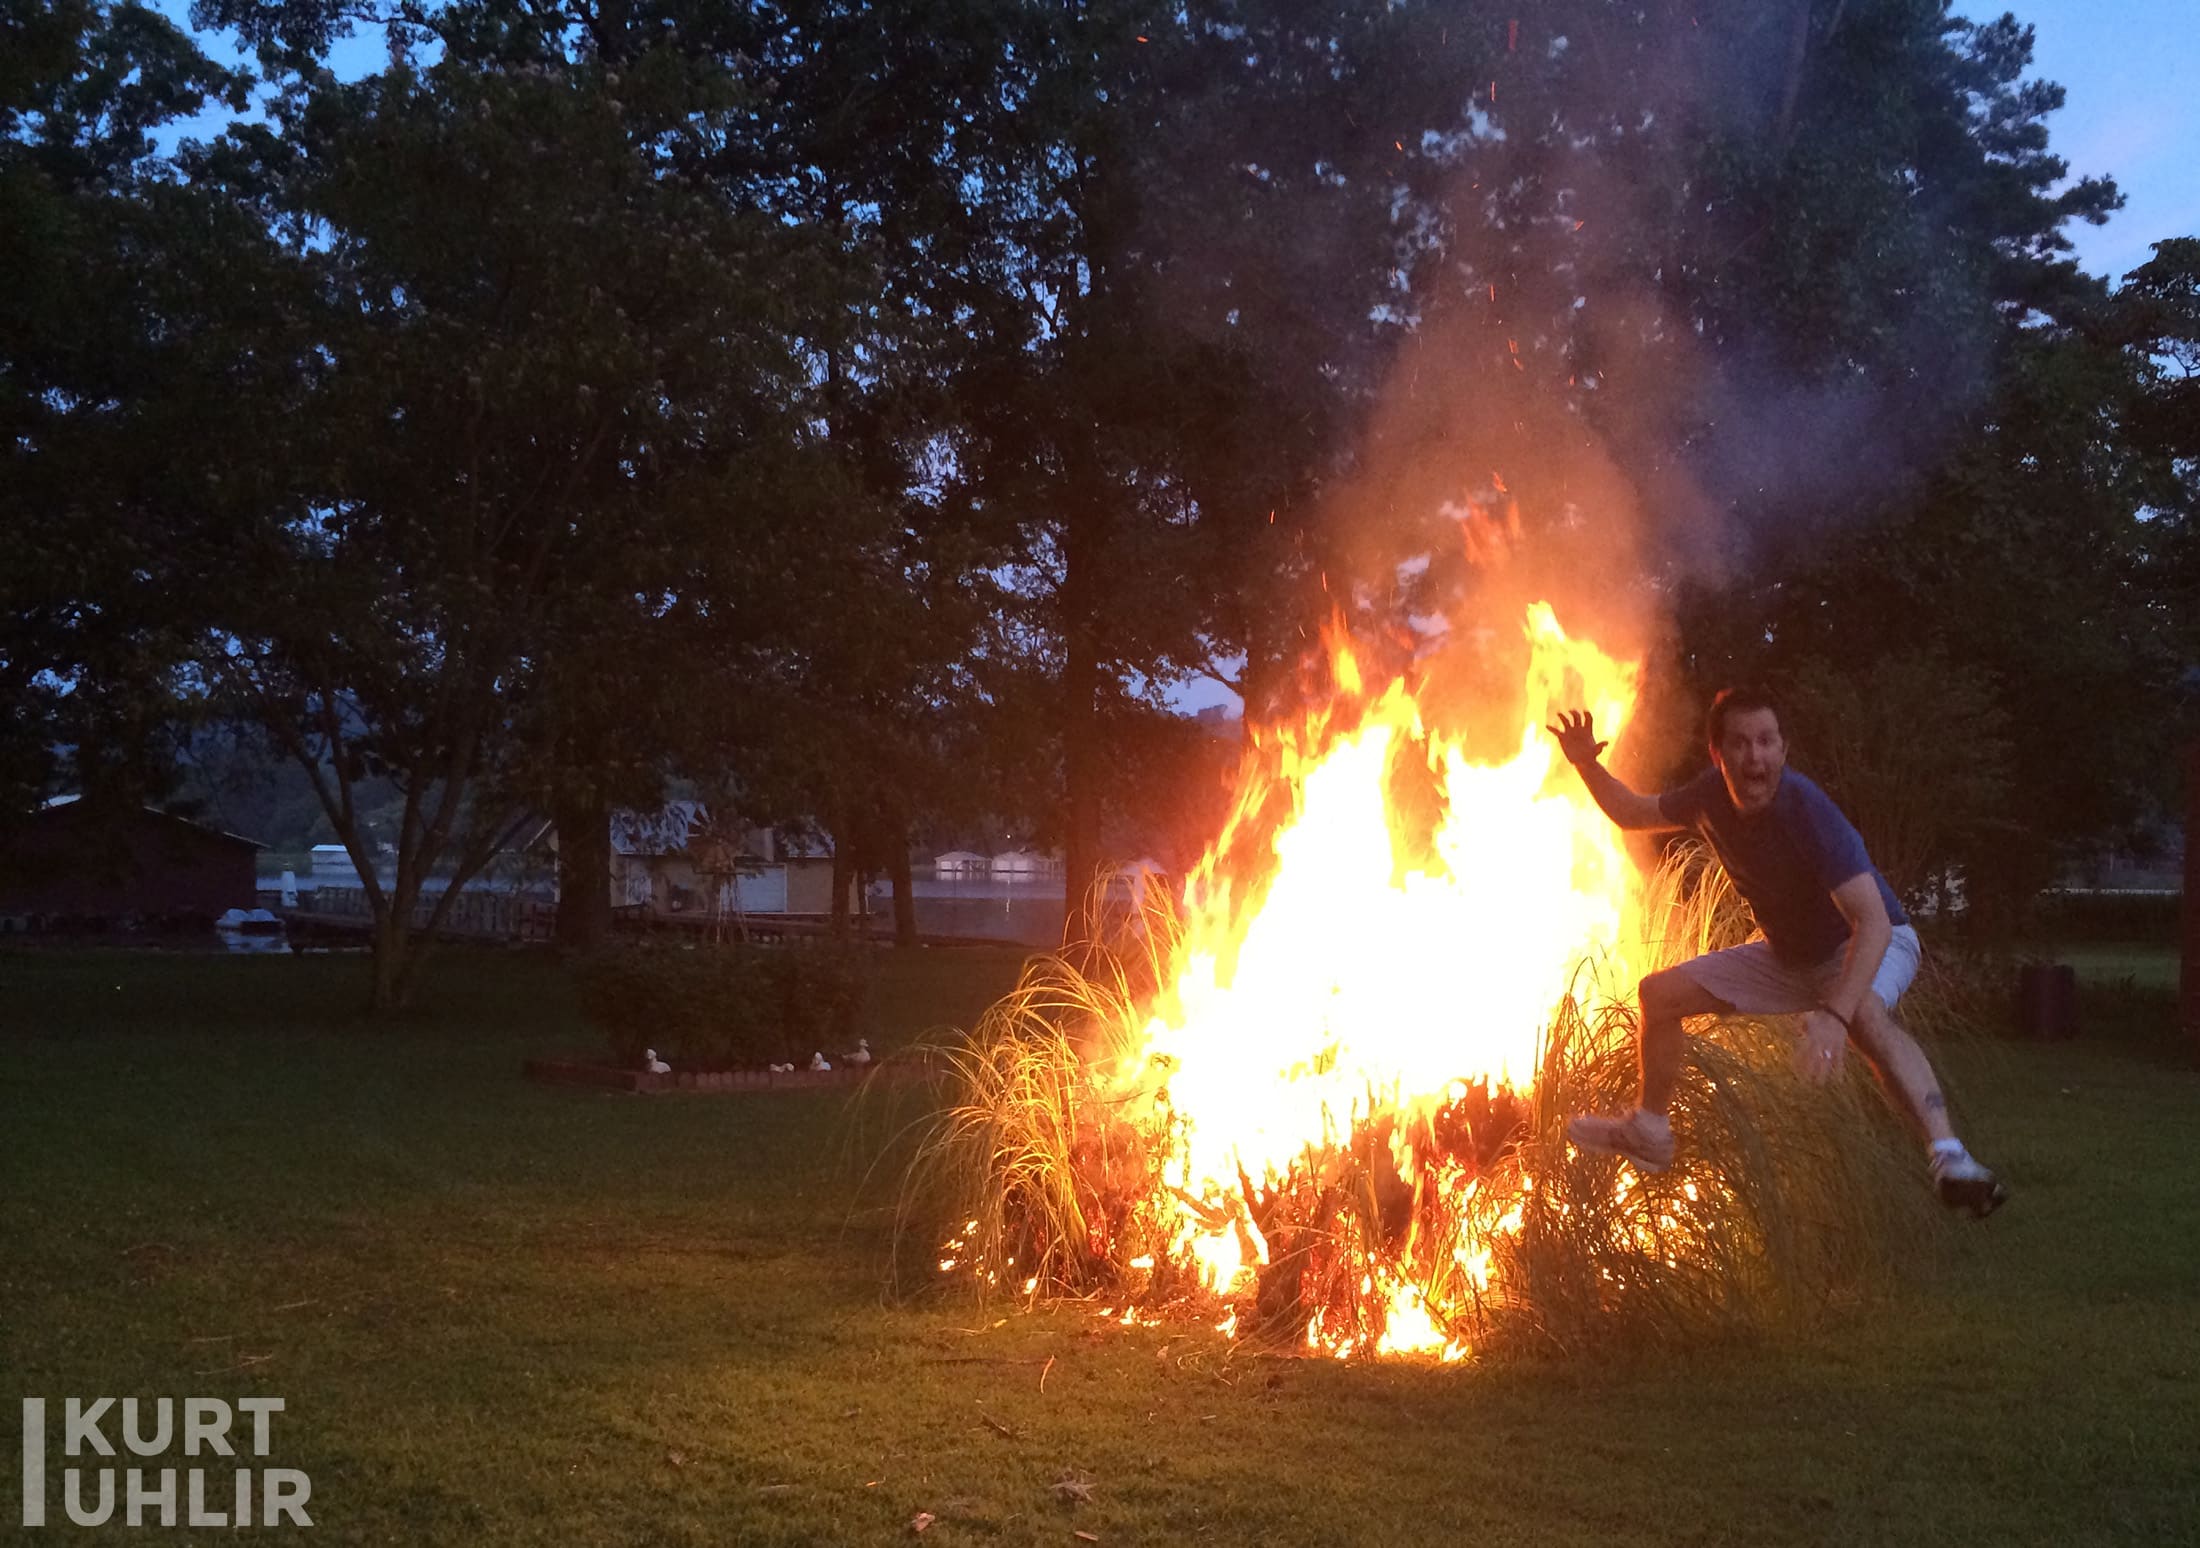 Kurt Uhlir - backyard bonfire fun